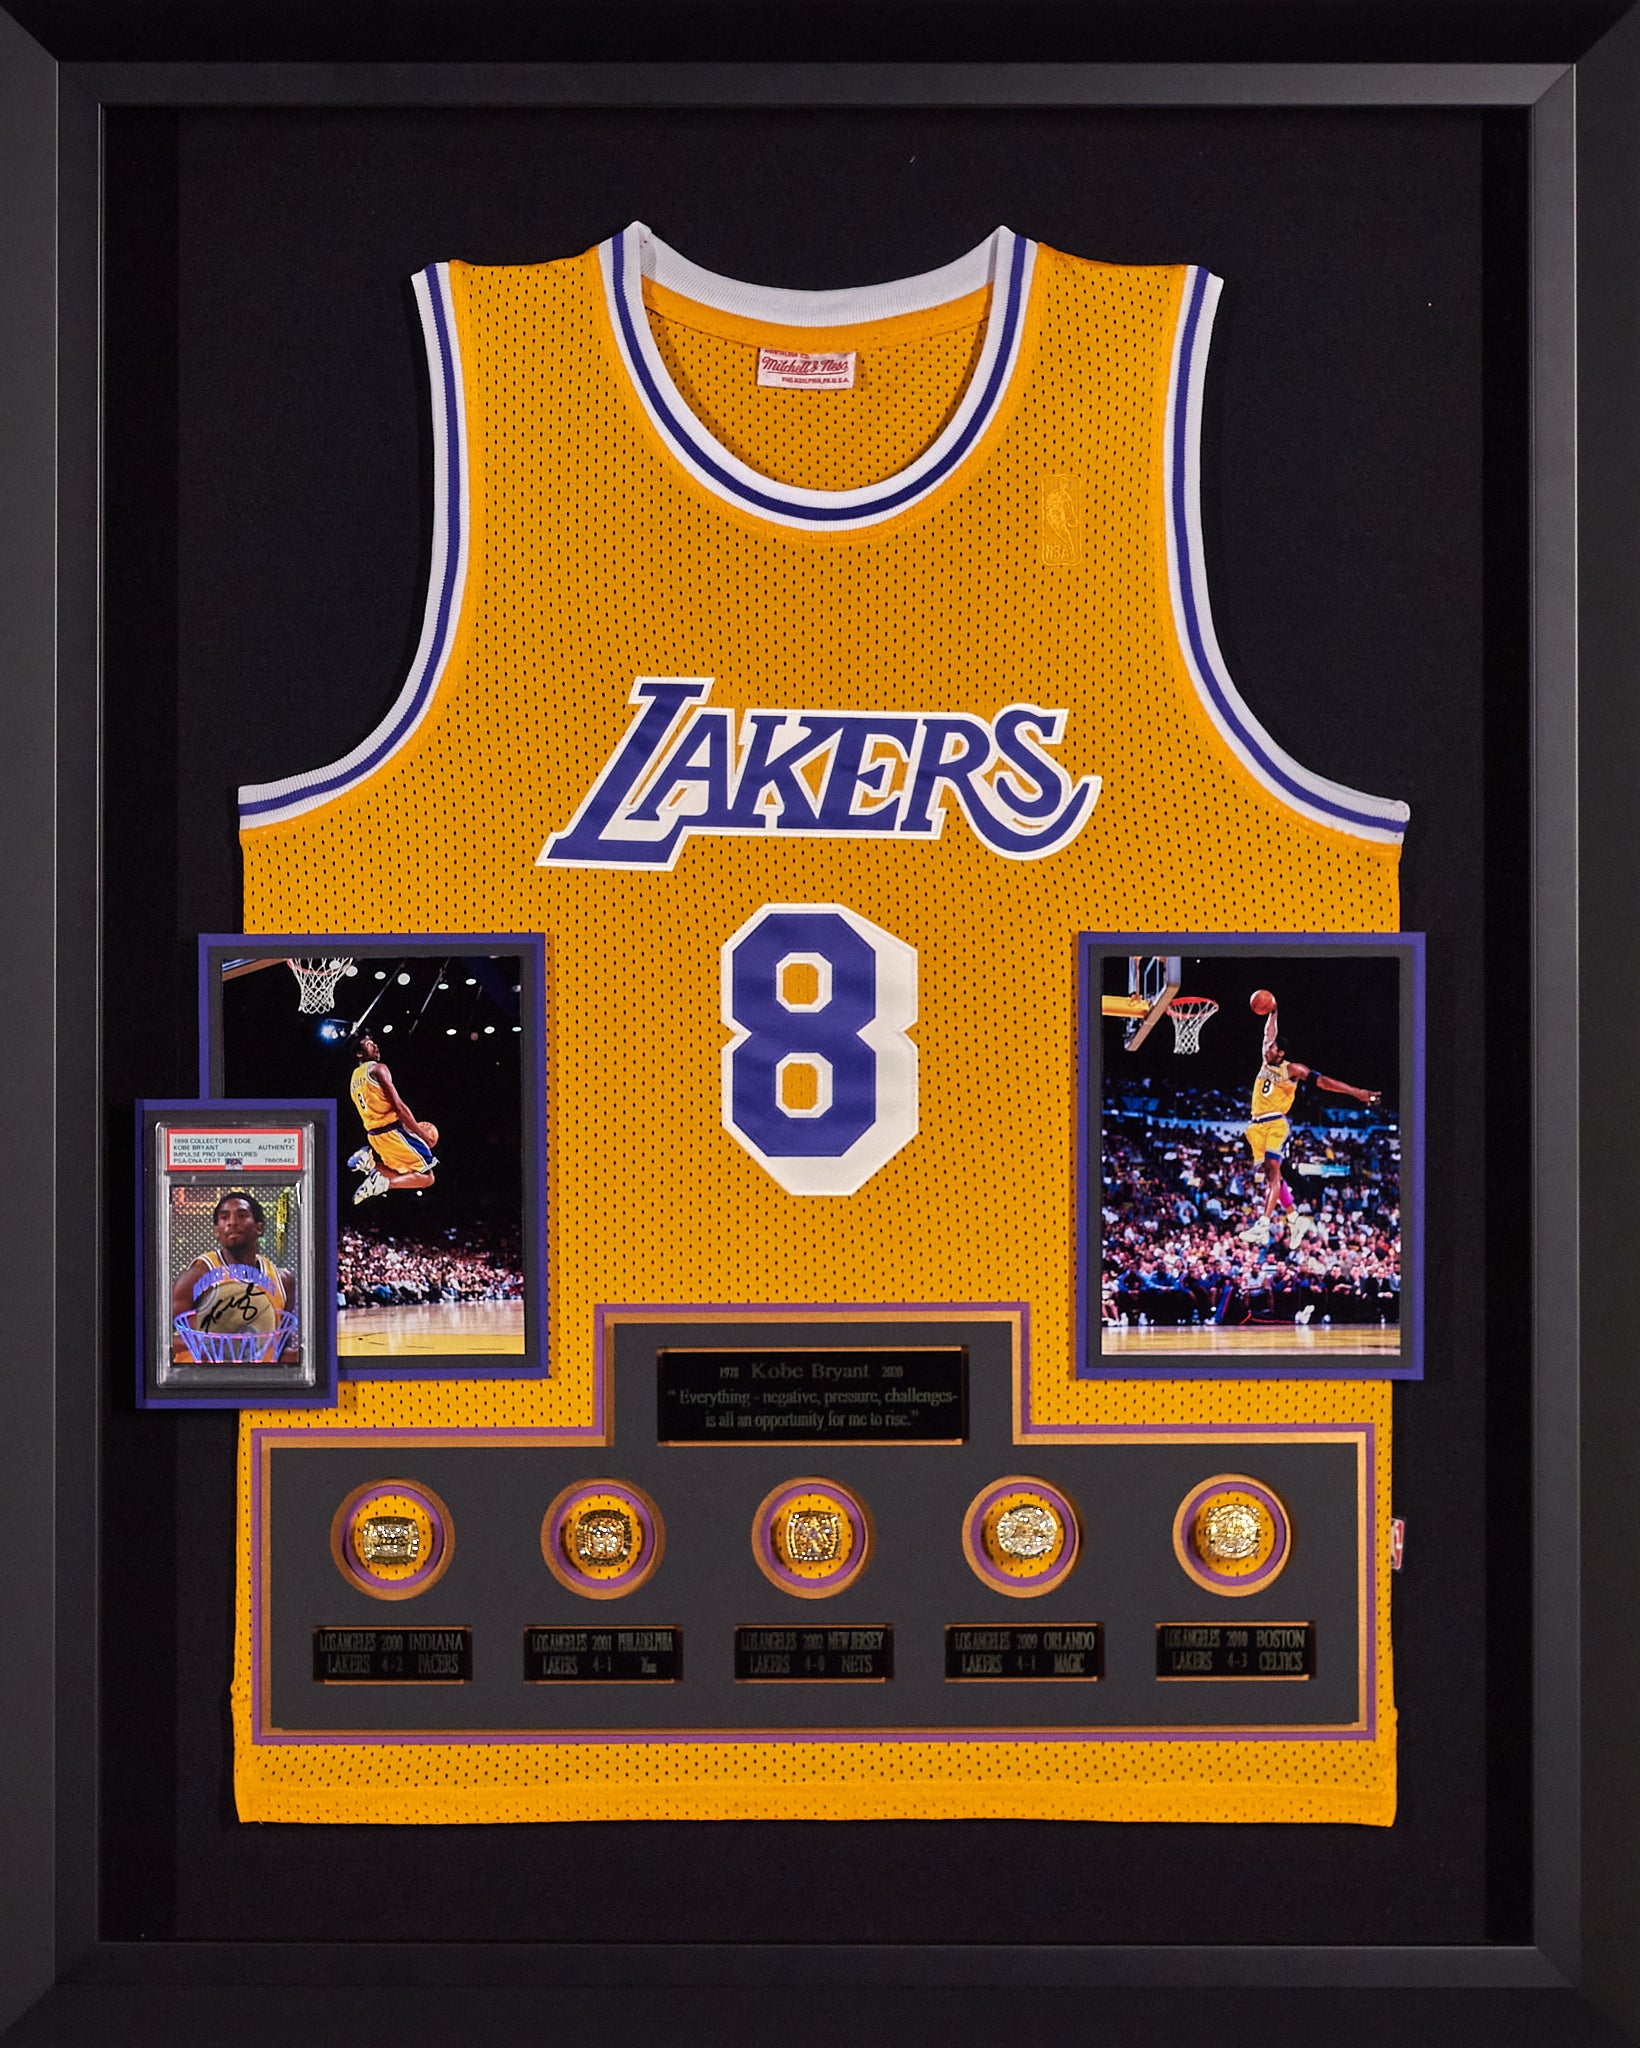 Autographed Kobe Bryant Photo - #8 Jersey Number framed PSA 8